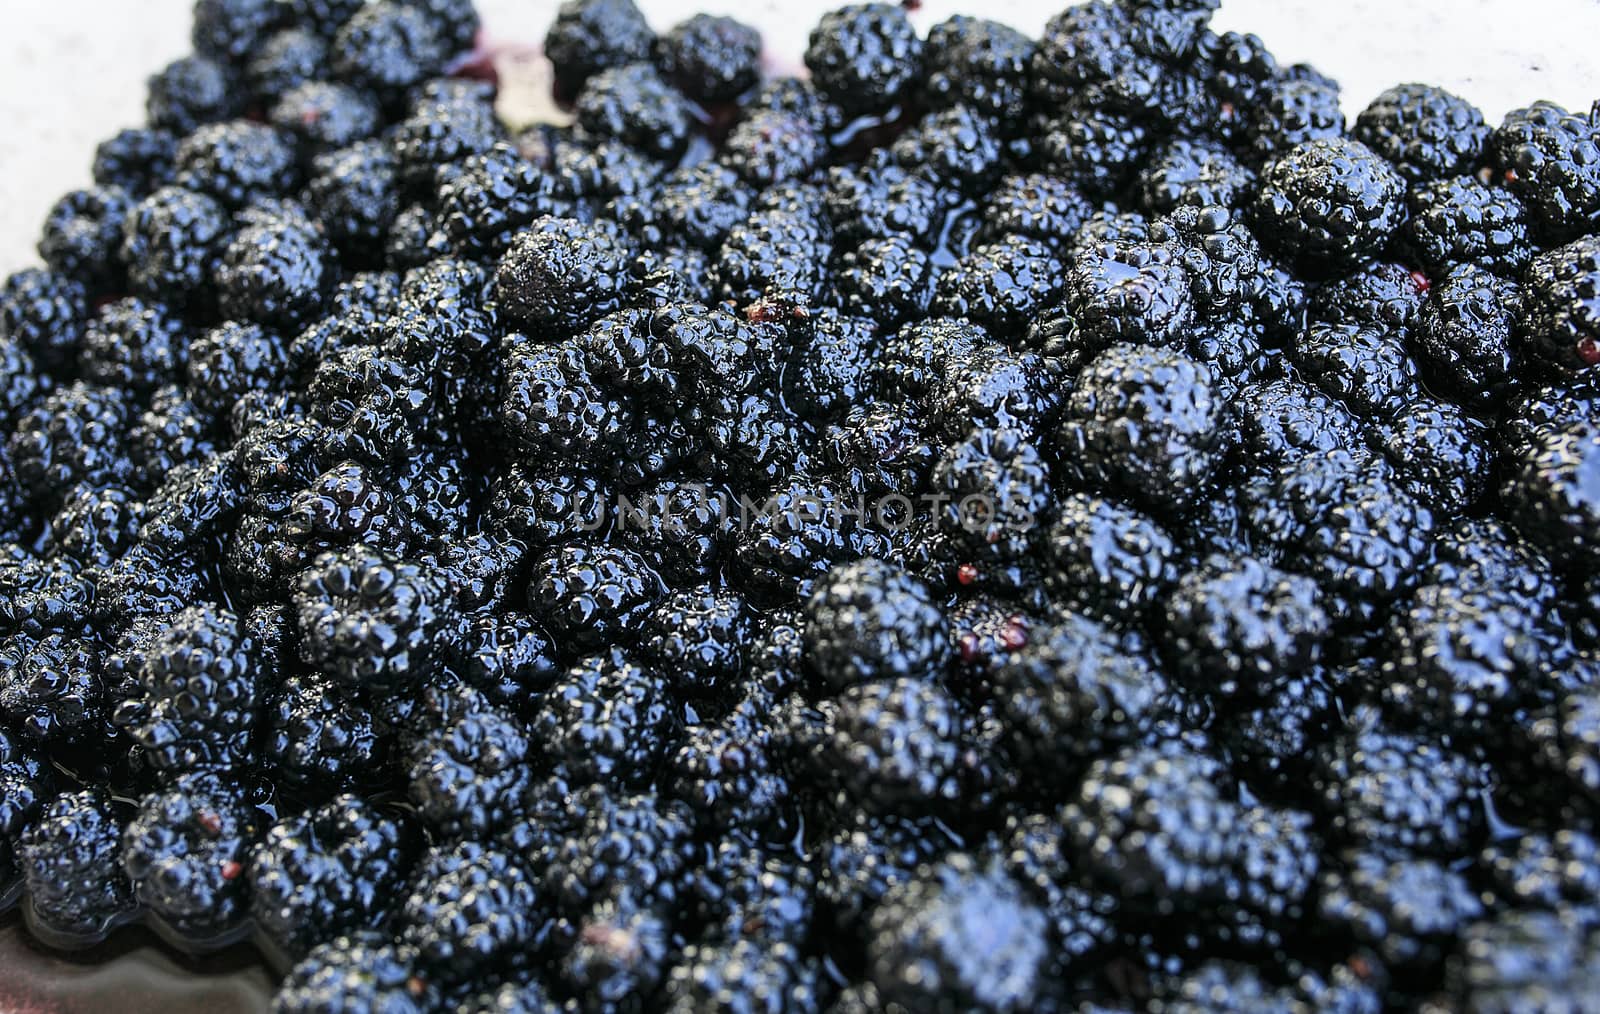 Black berries ready to make a pie by nachrc2001